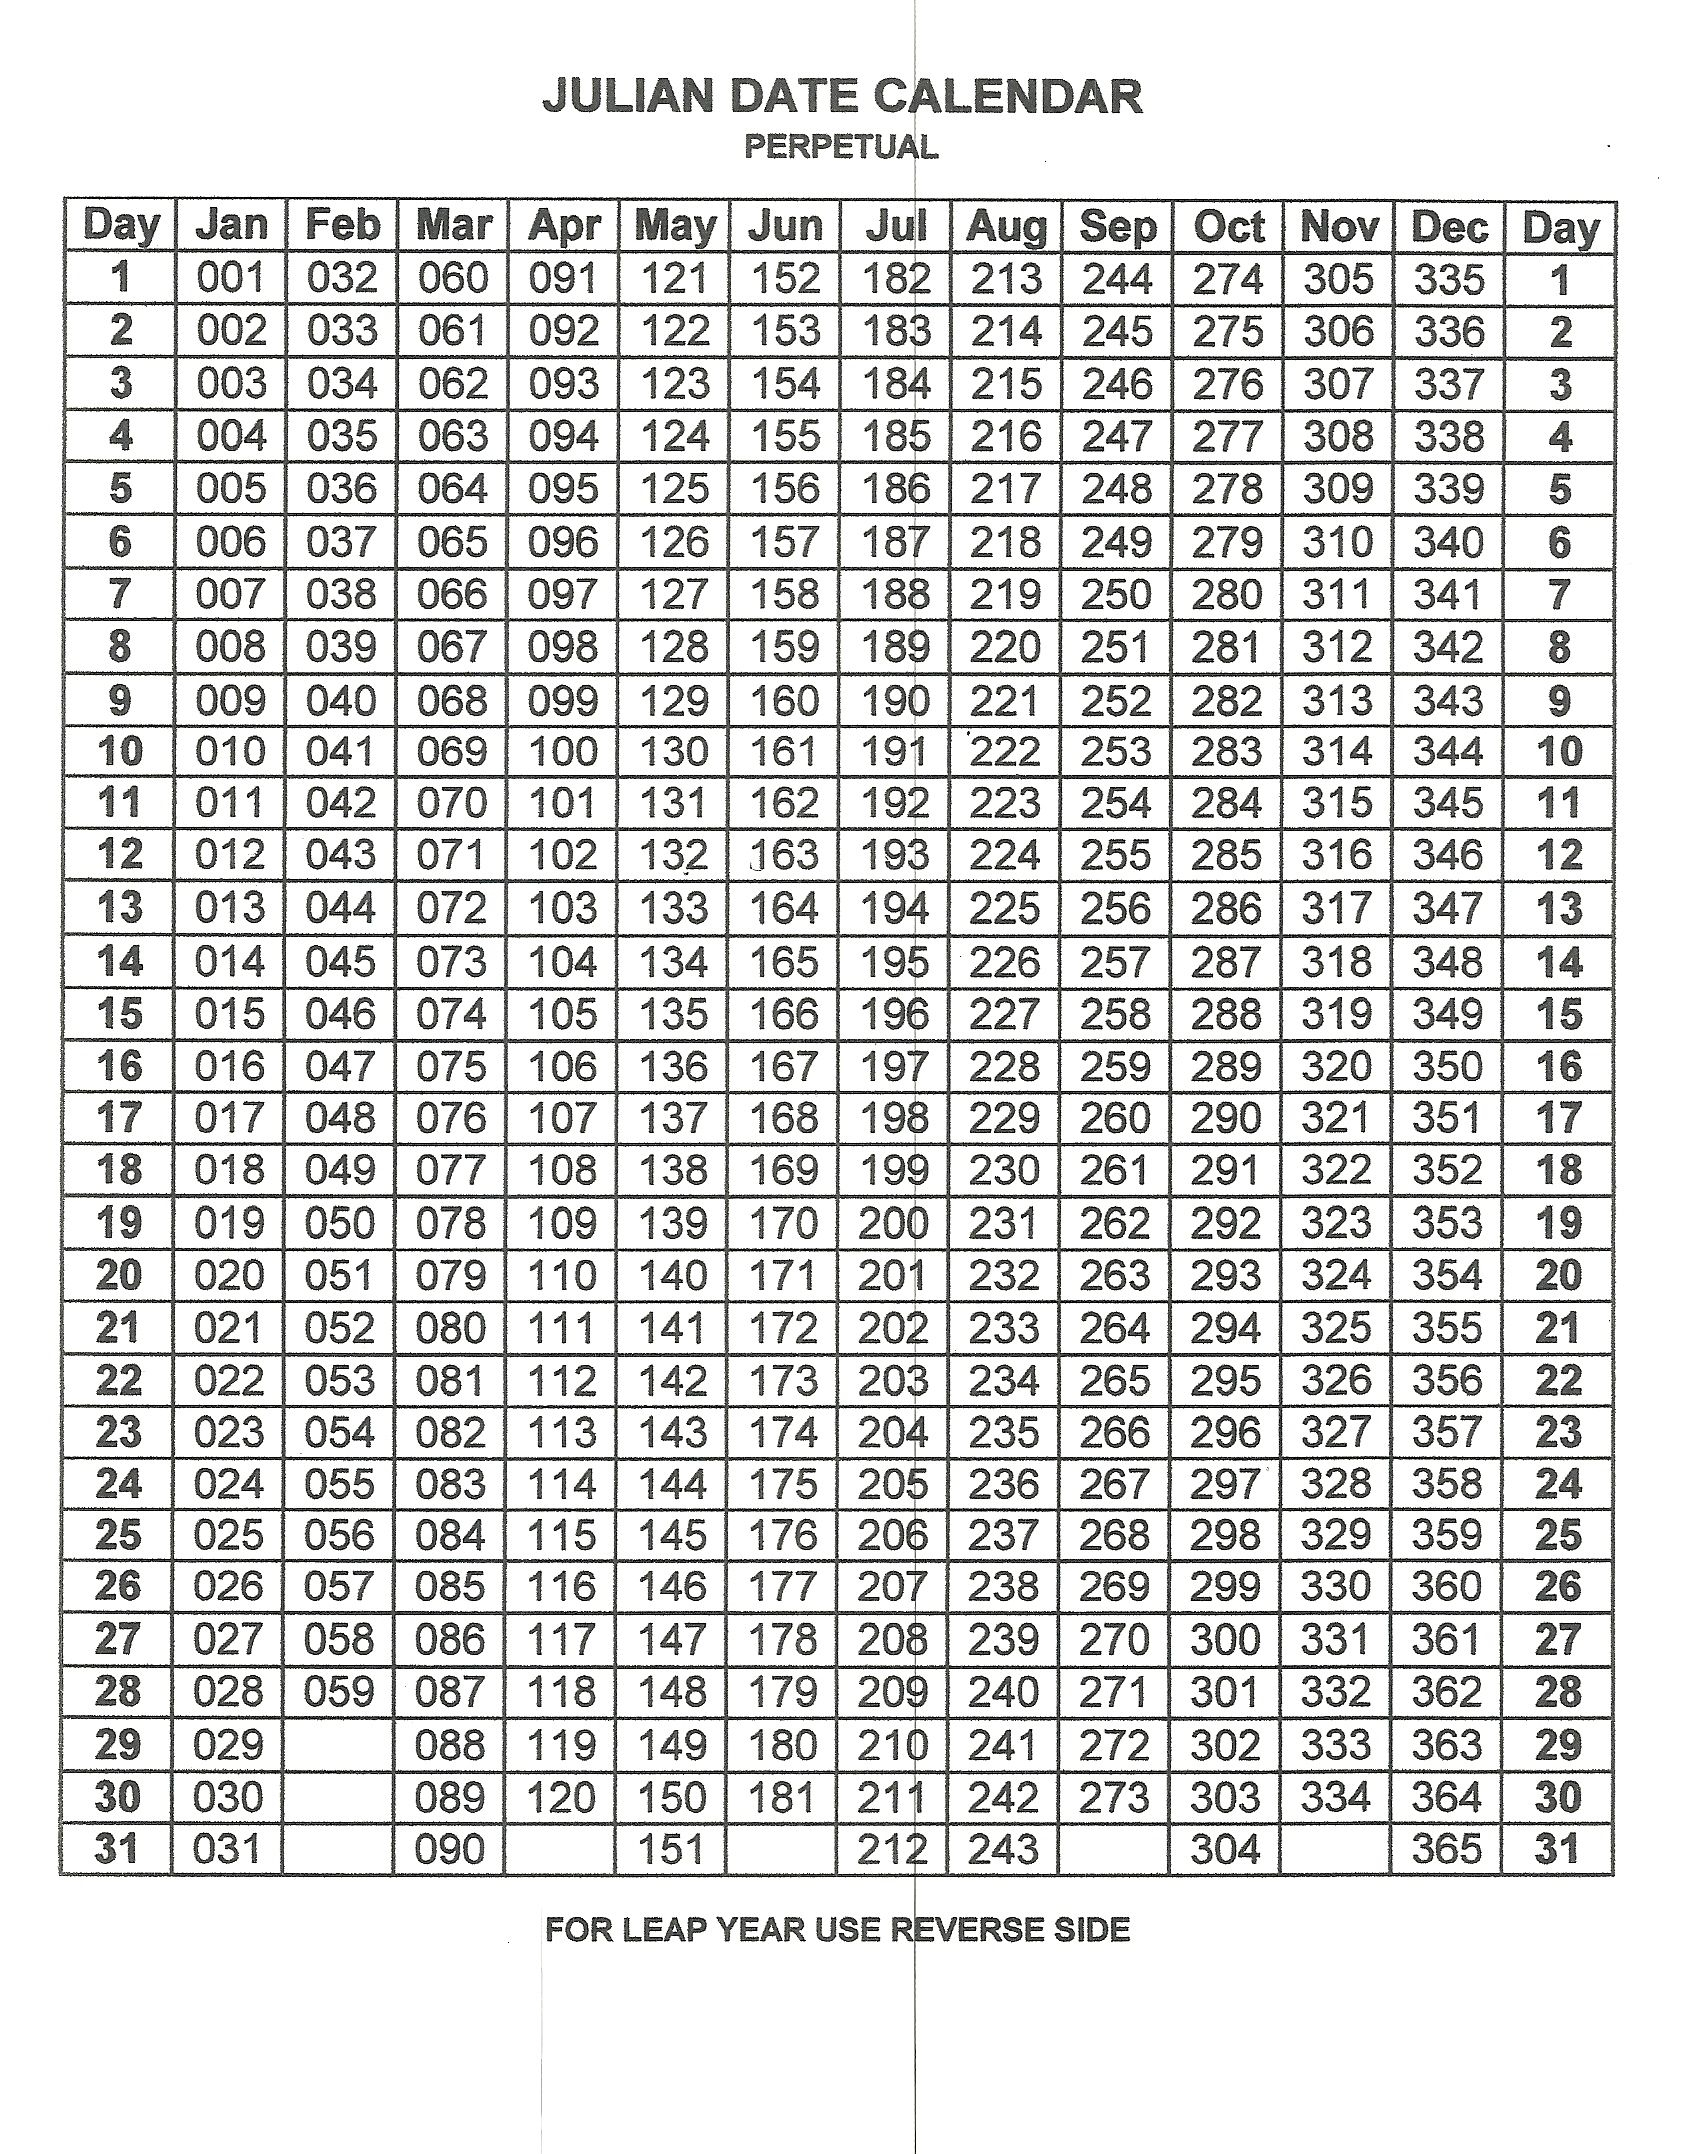 Perpetual Julian Date Calendar | Julian Dates, Calendar for 2020 Julian Date Calendar Printable